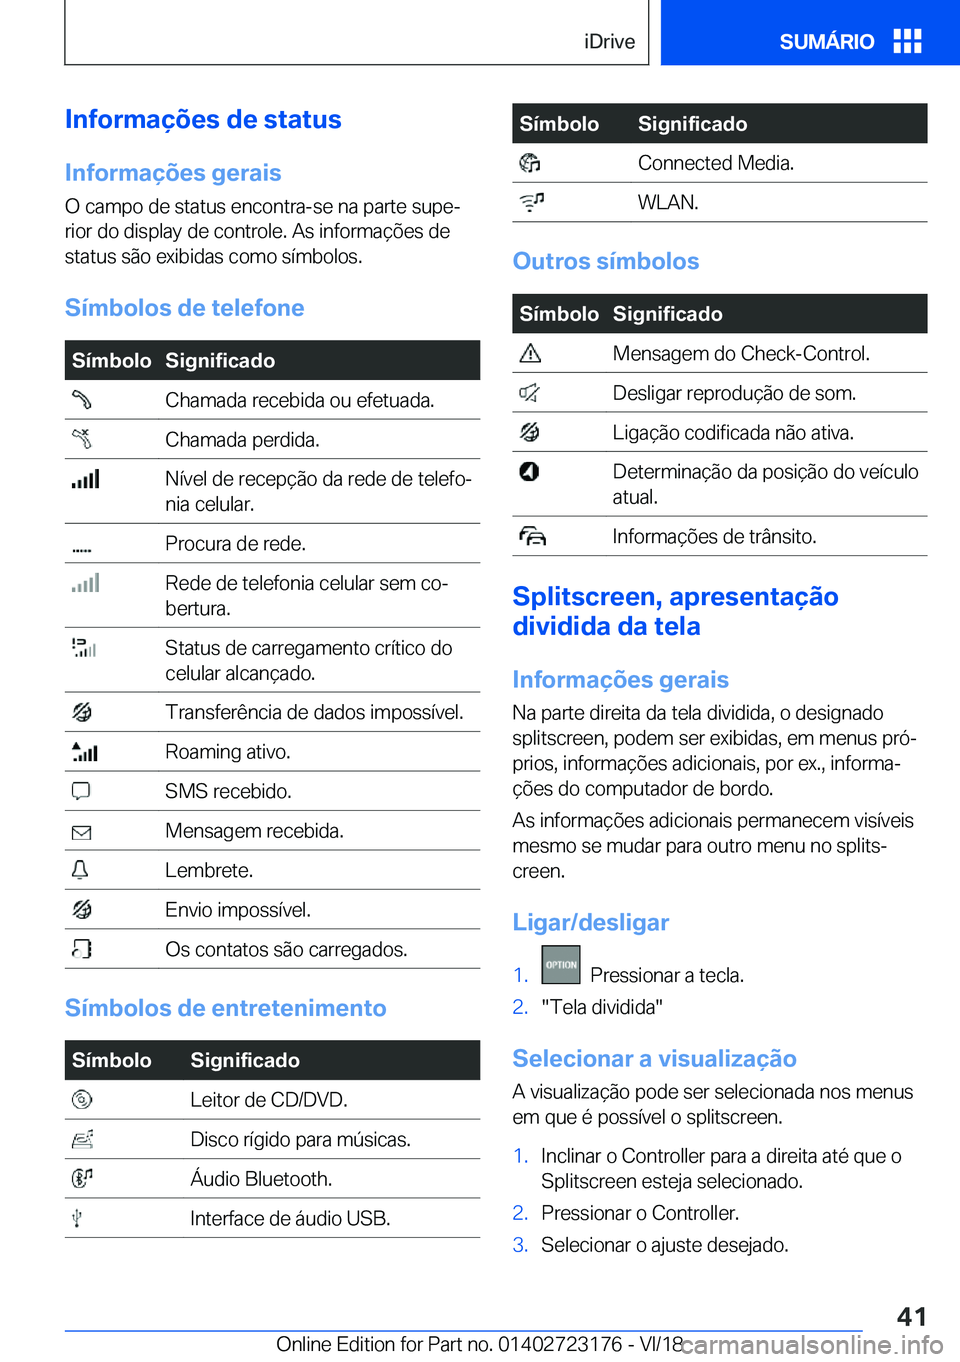 BMW 4 SERIES GRAN COUPE 2019  Manual do condutor (in Portuguese) �I�n�f�o�r�m�a�